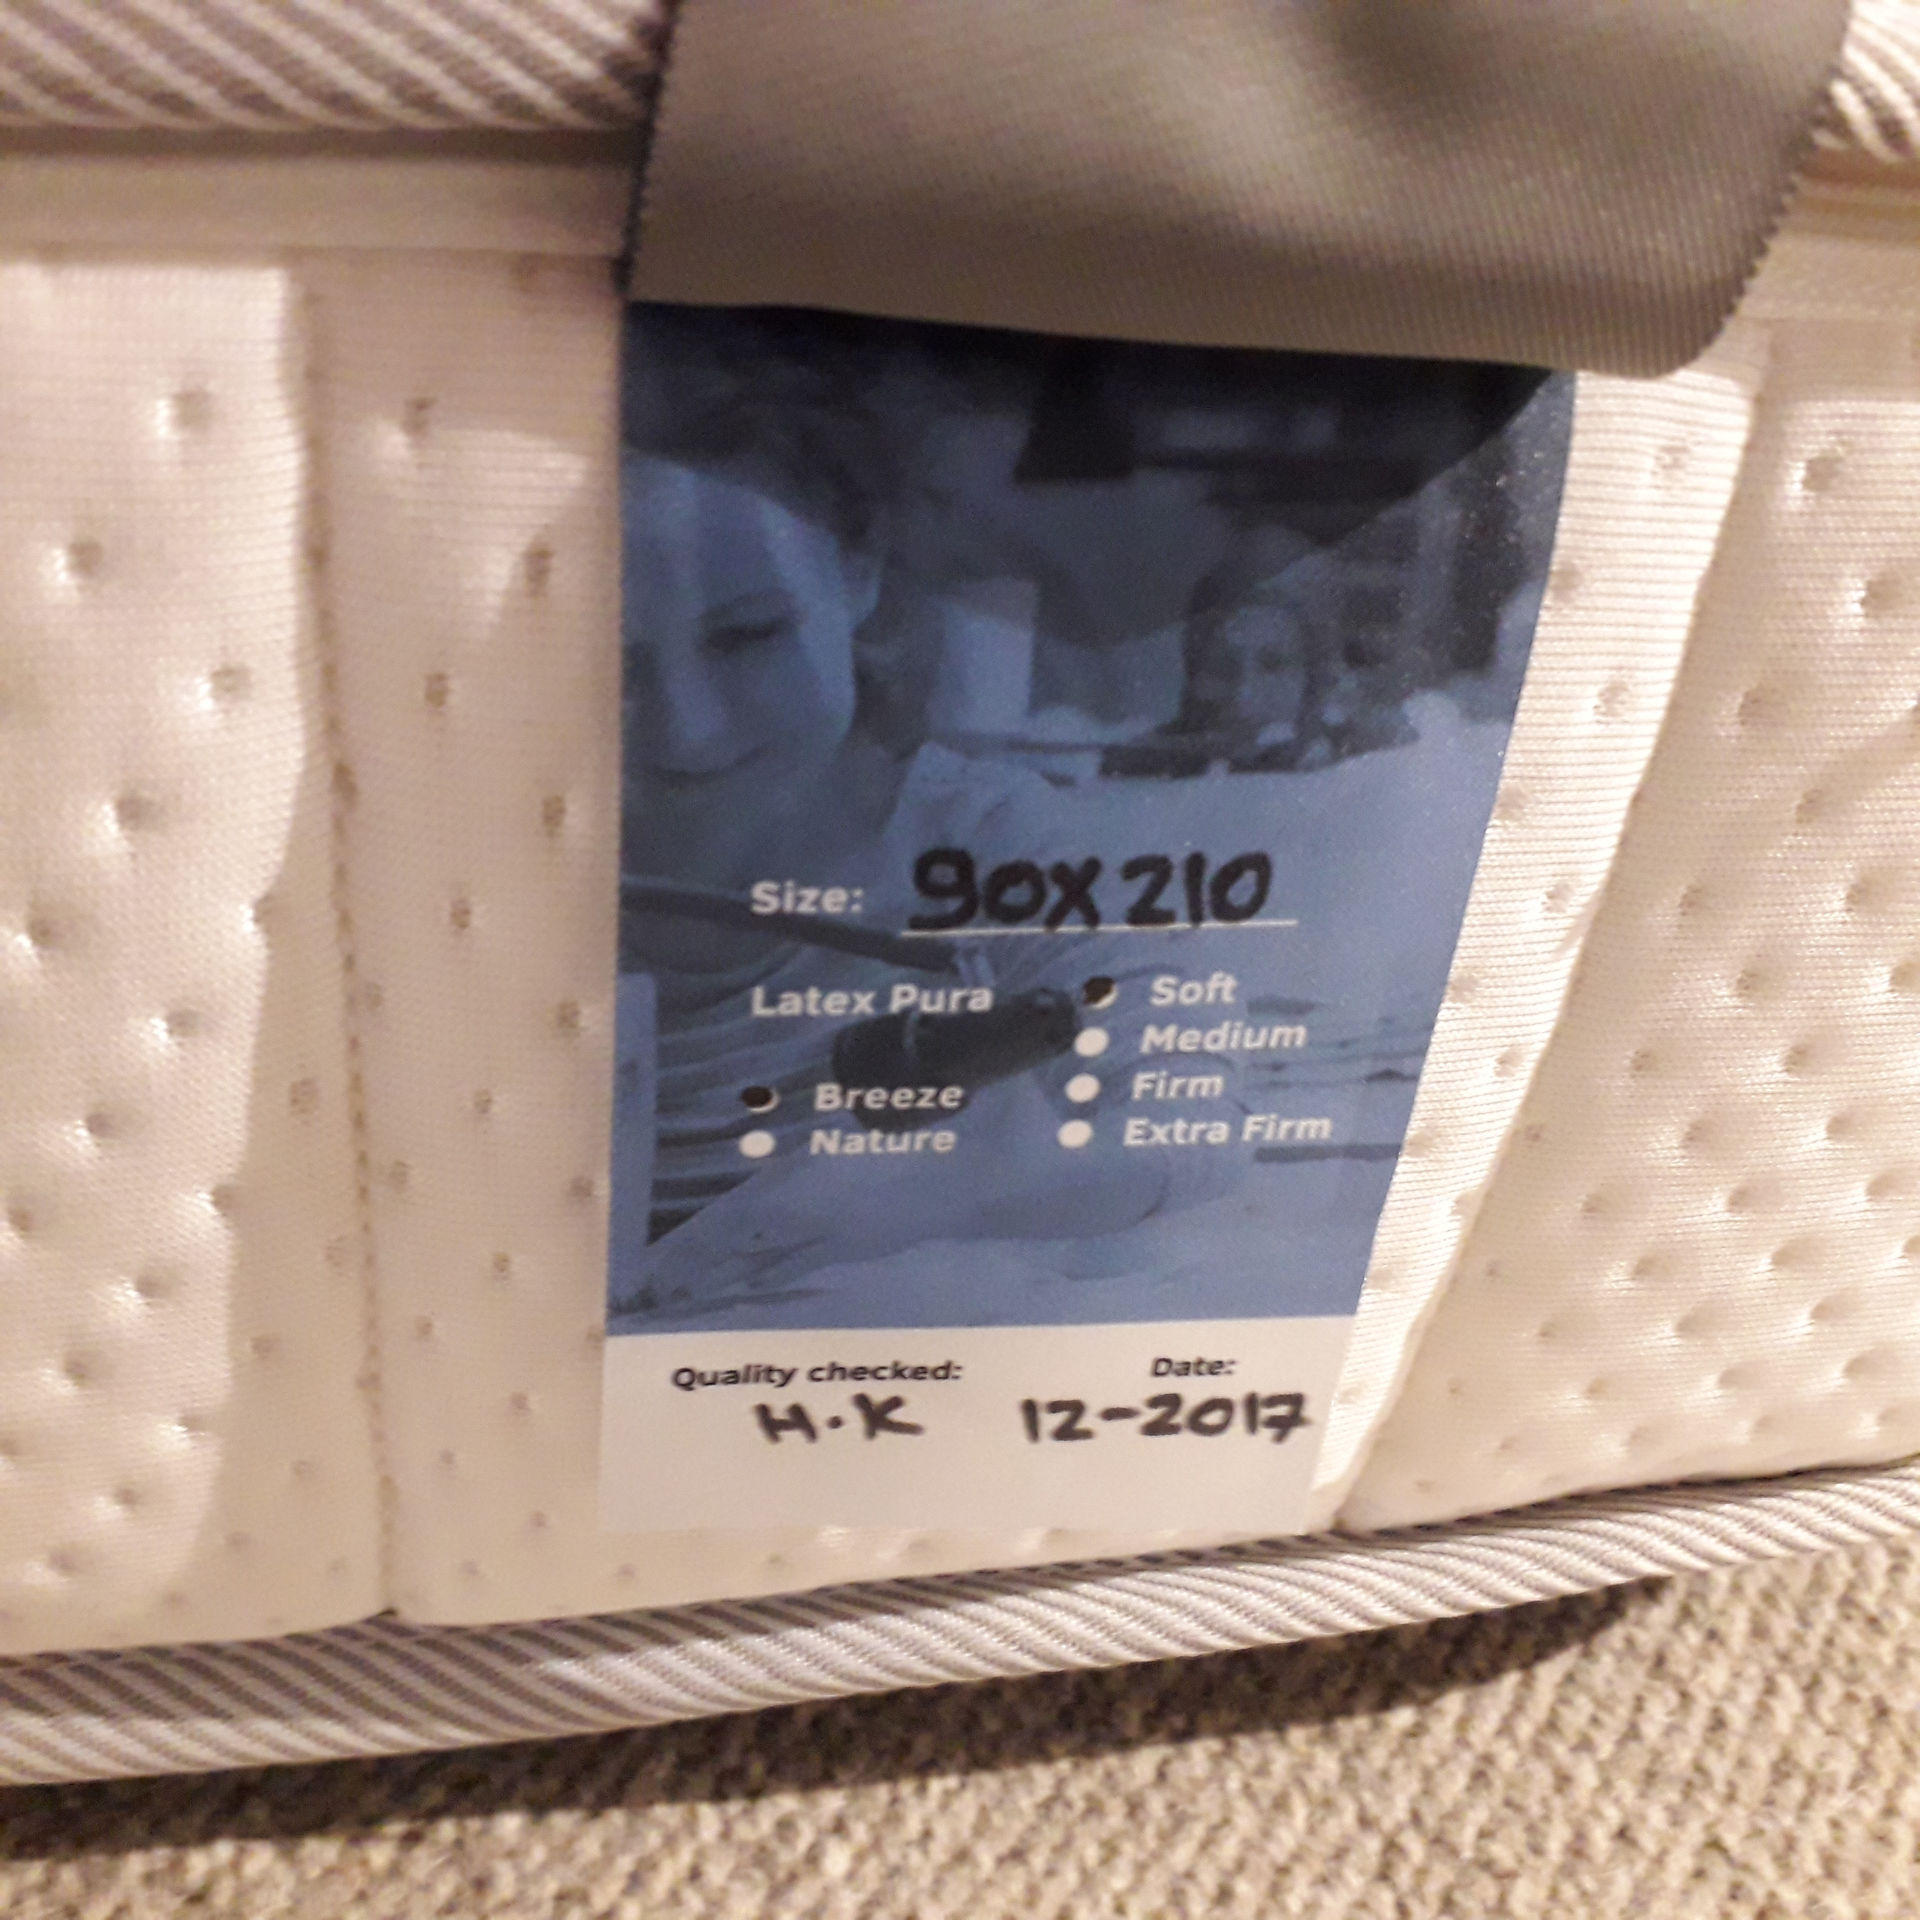 Auping Cresto pocketmatras - 90x210 Soft